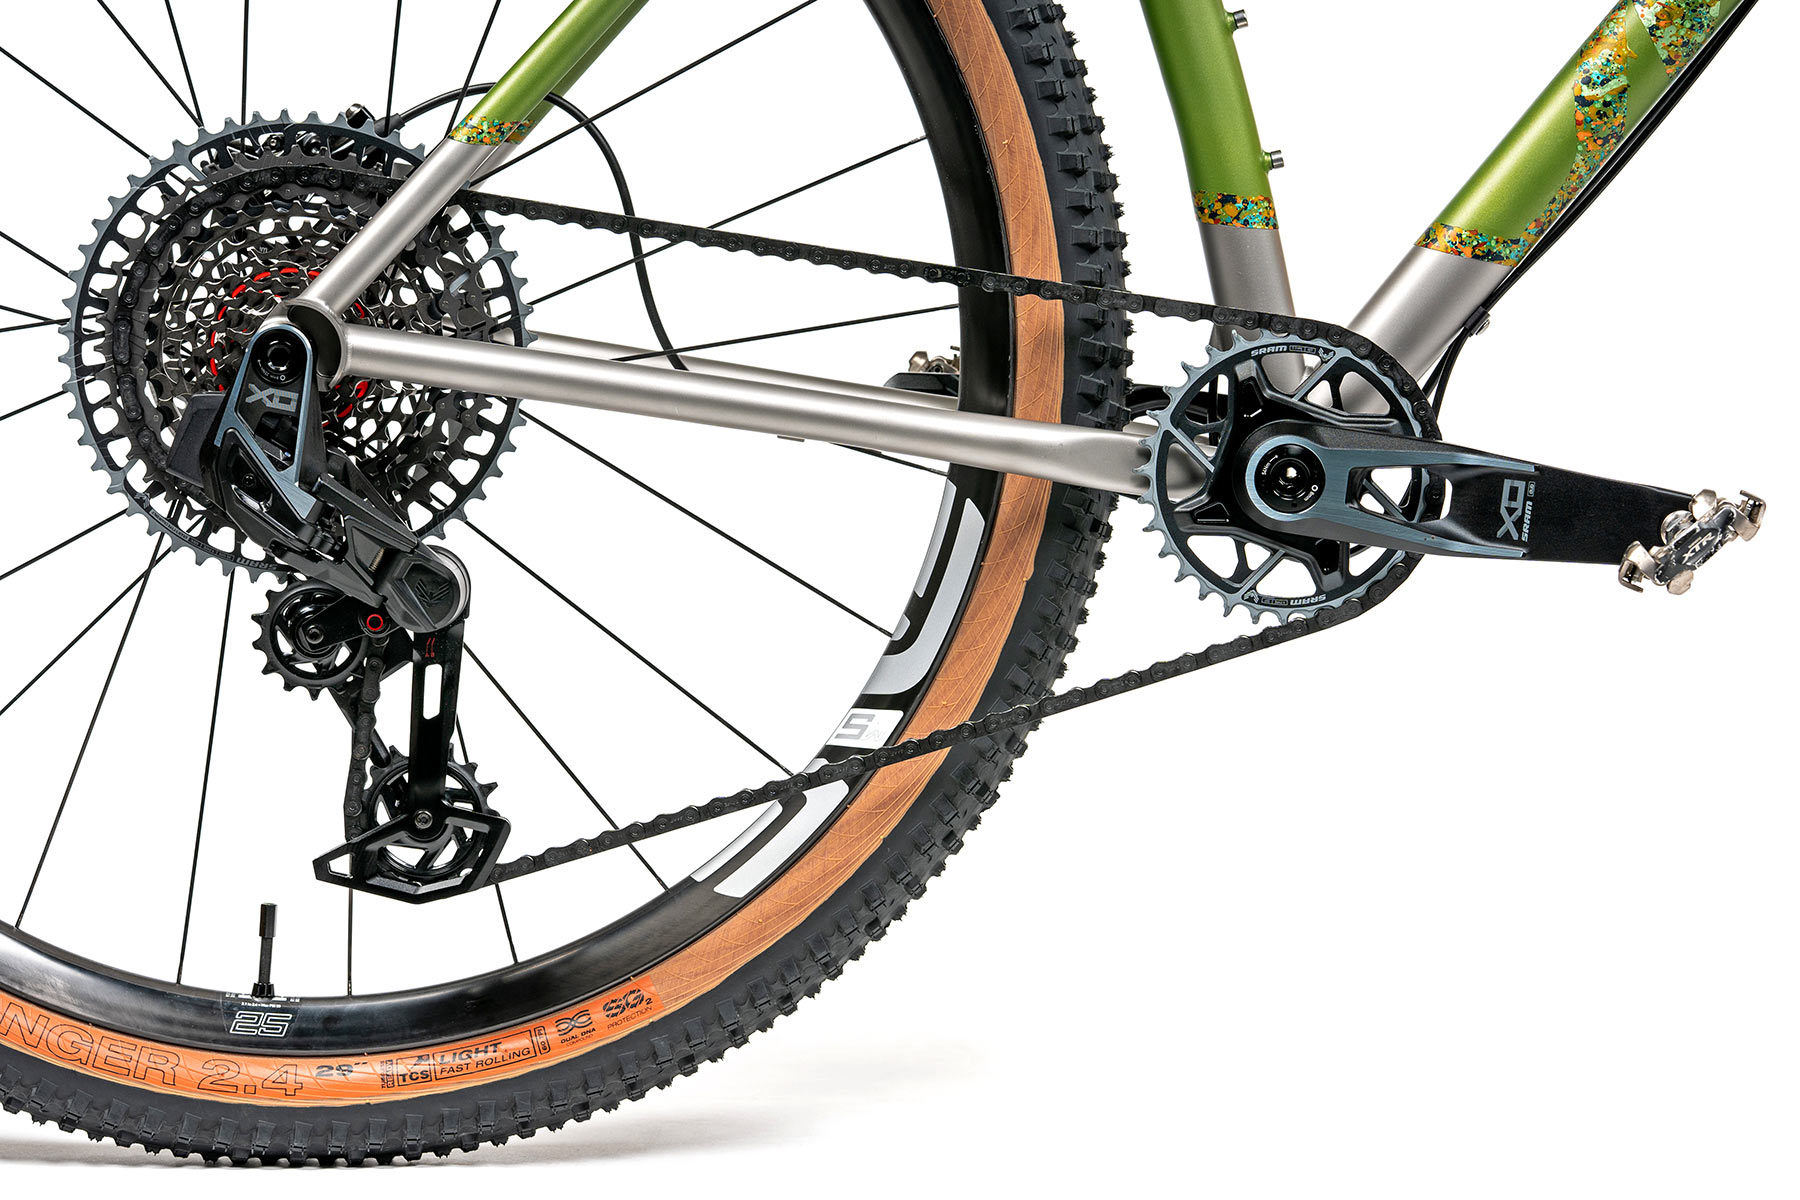 Mosaic MT-1 custom titanium XC hardtail mountain bike UDH update with SRAM T-type transmission